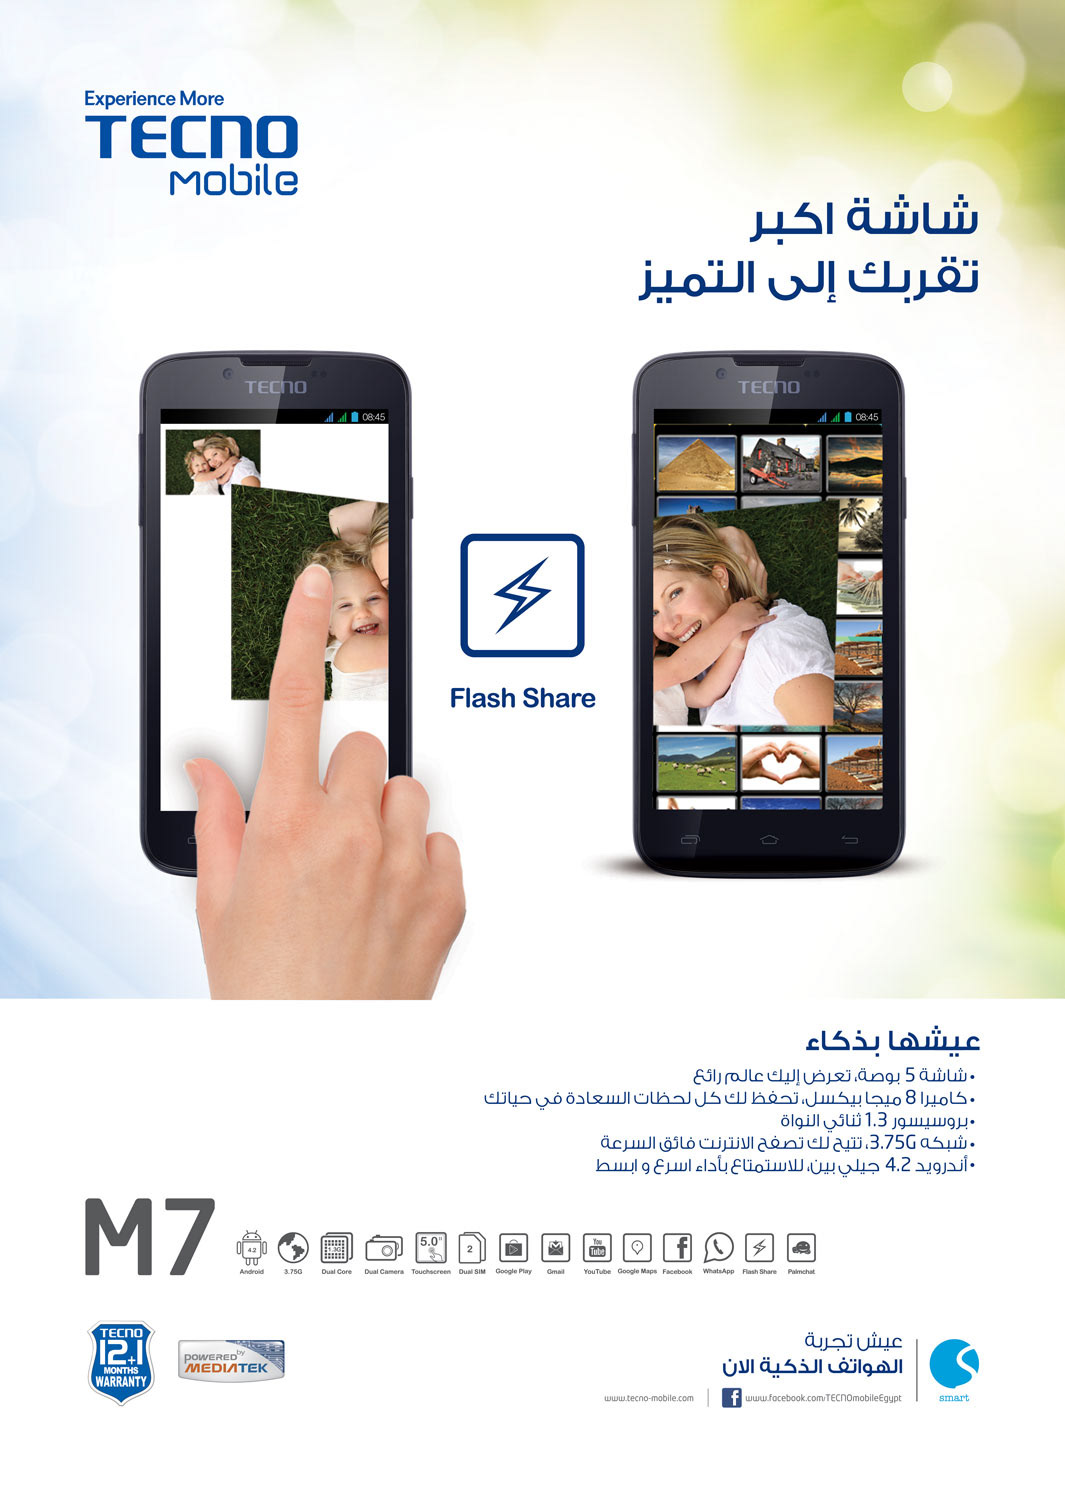 TECNO MOBILE  mobile mobile ads android posters mobile design